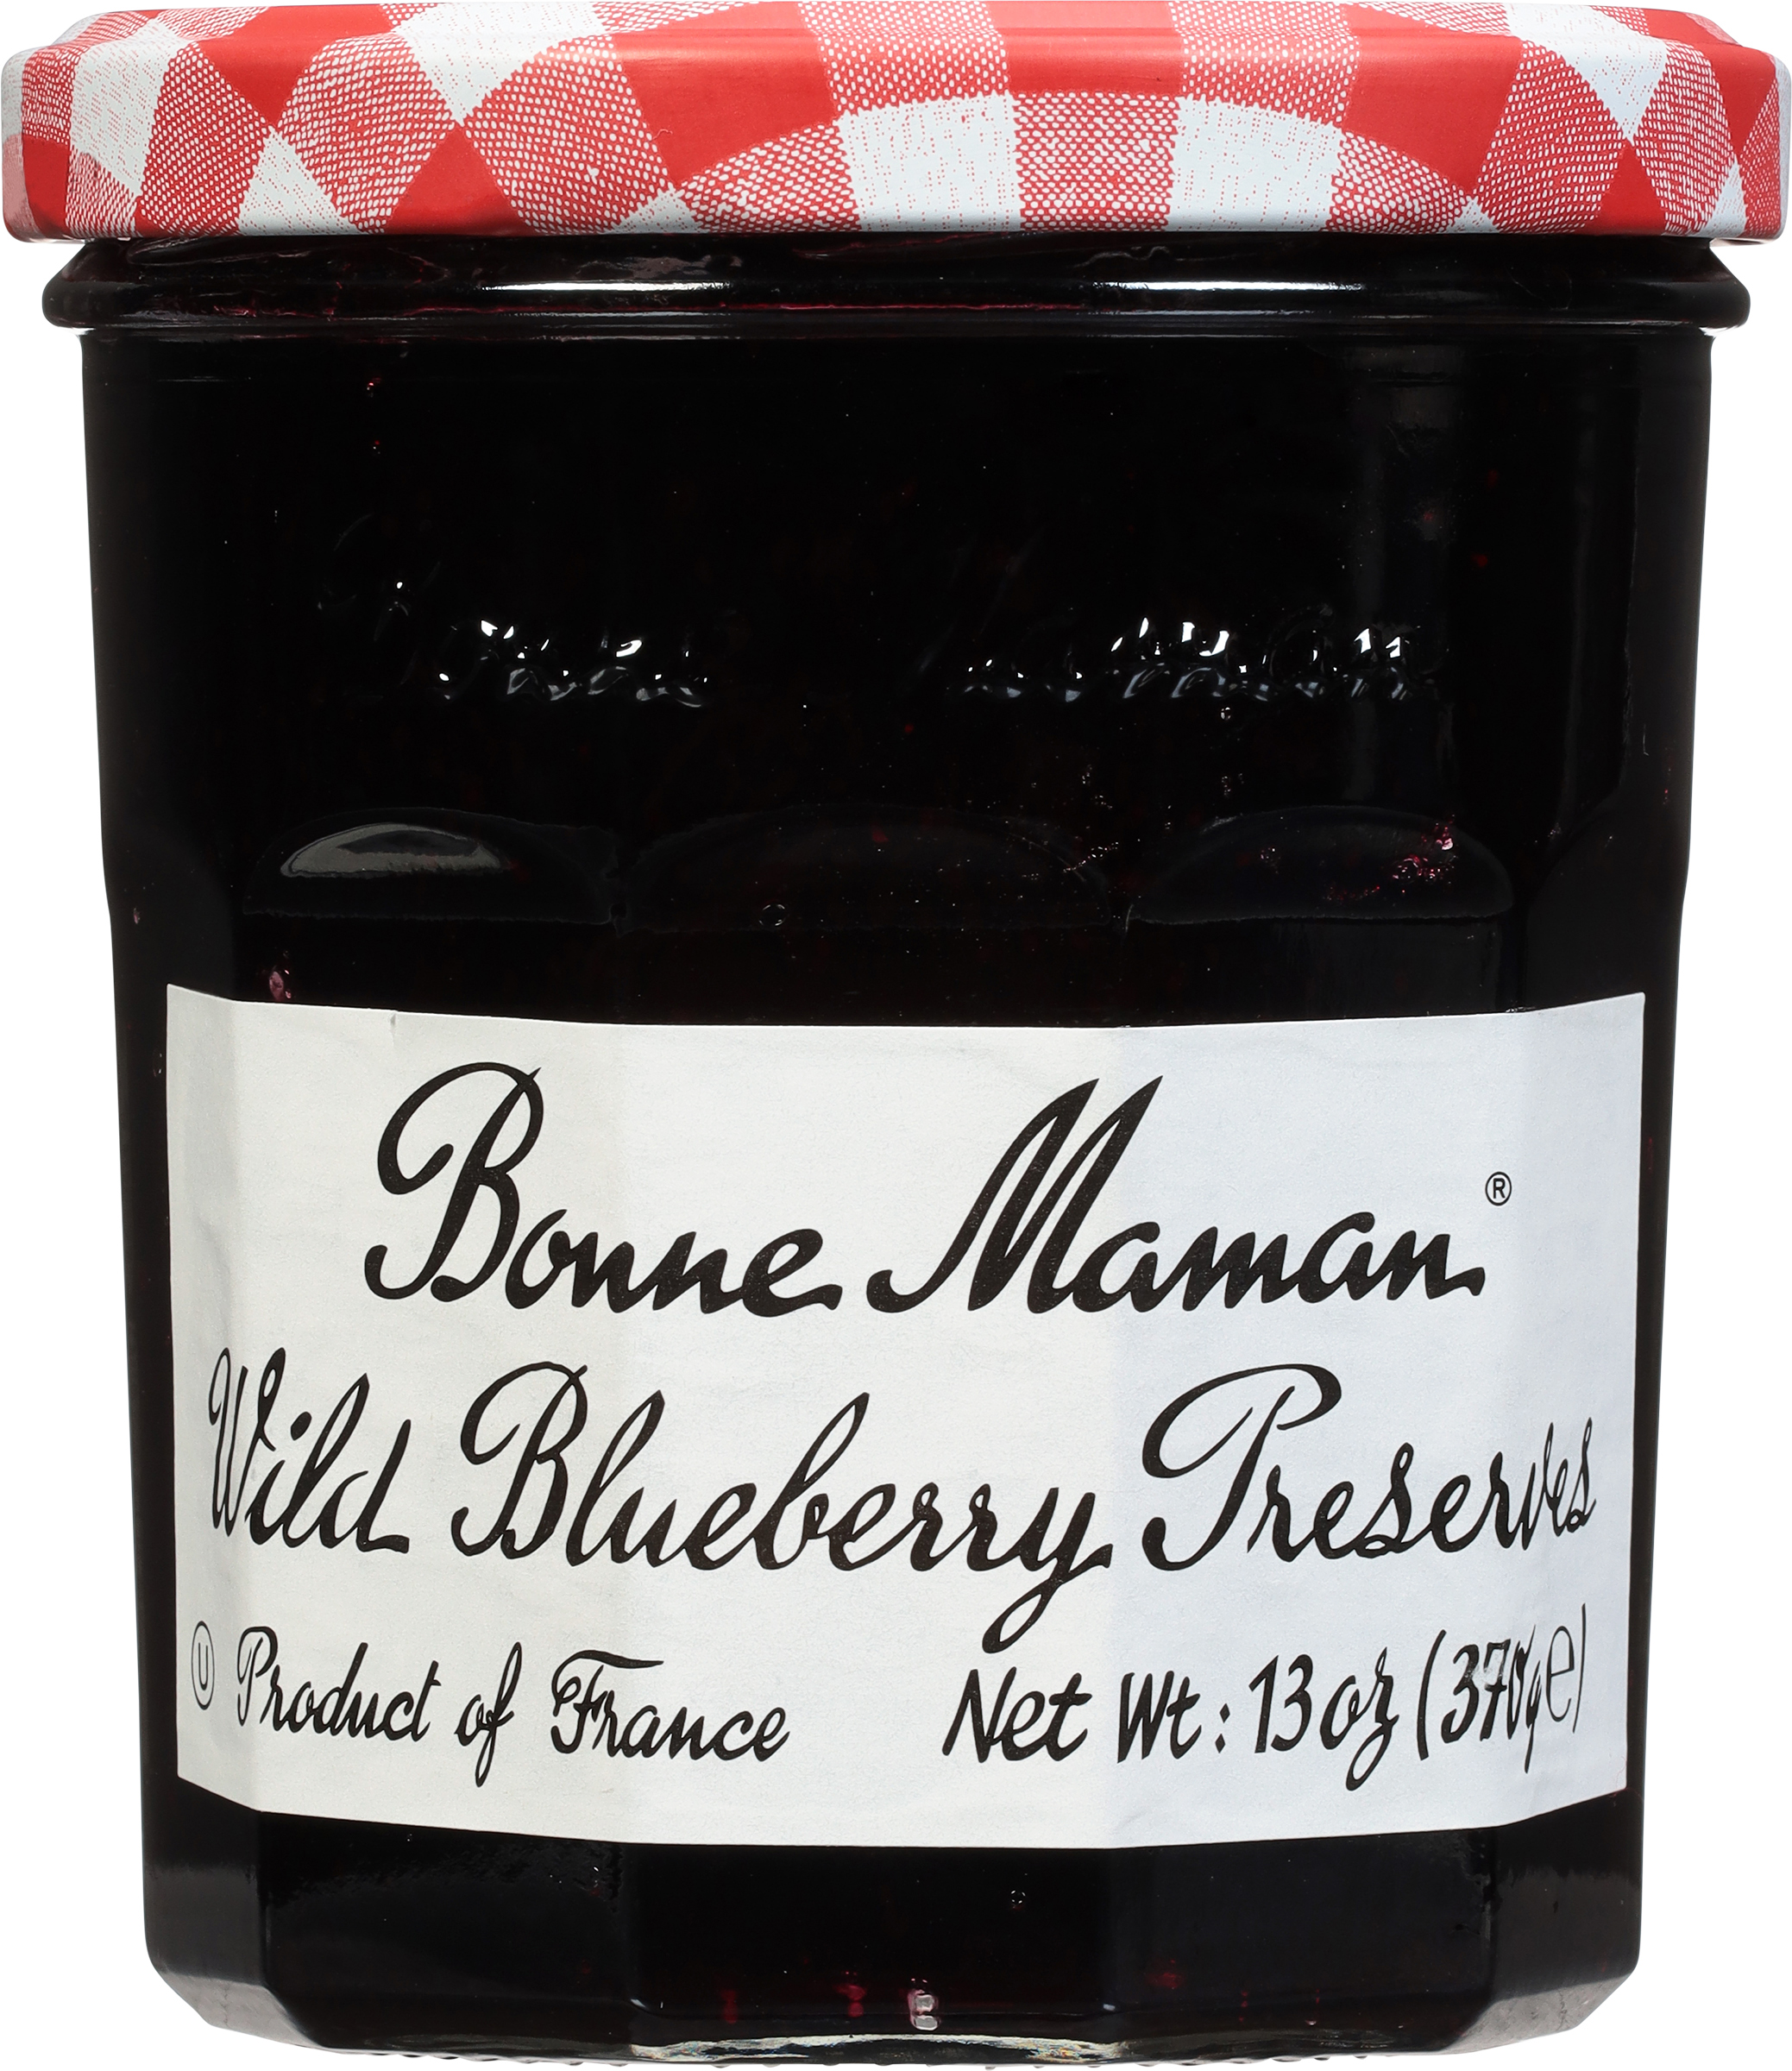 Bonne Maman Wild Blueberry Preserves 13 oz Jar - image 3 of 4